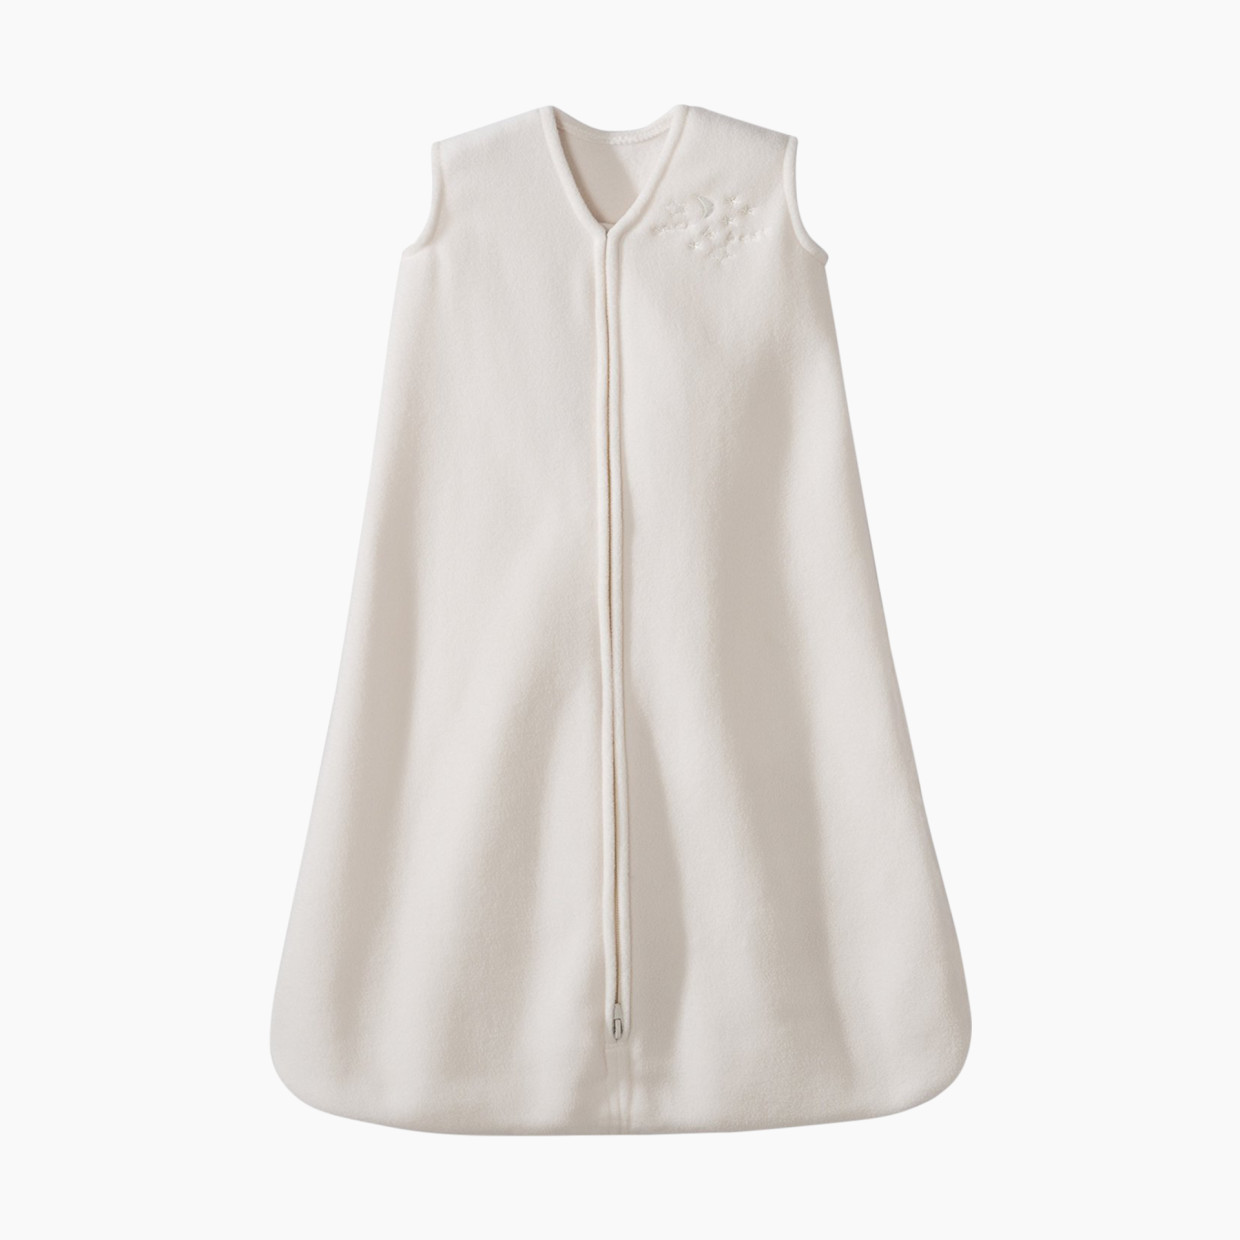 Halo SleepSack Wearable Blanket (Micro-Fleece) - Cream, Medium.